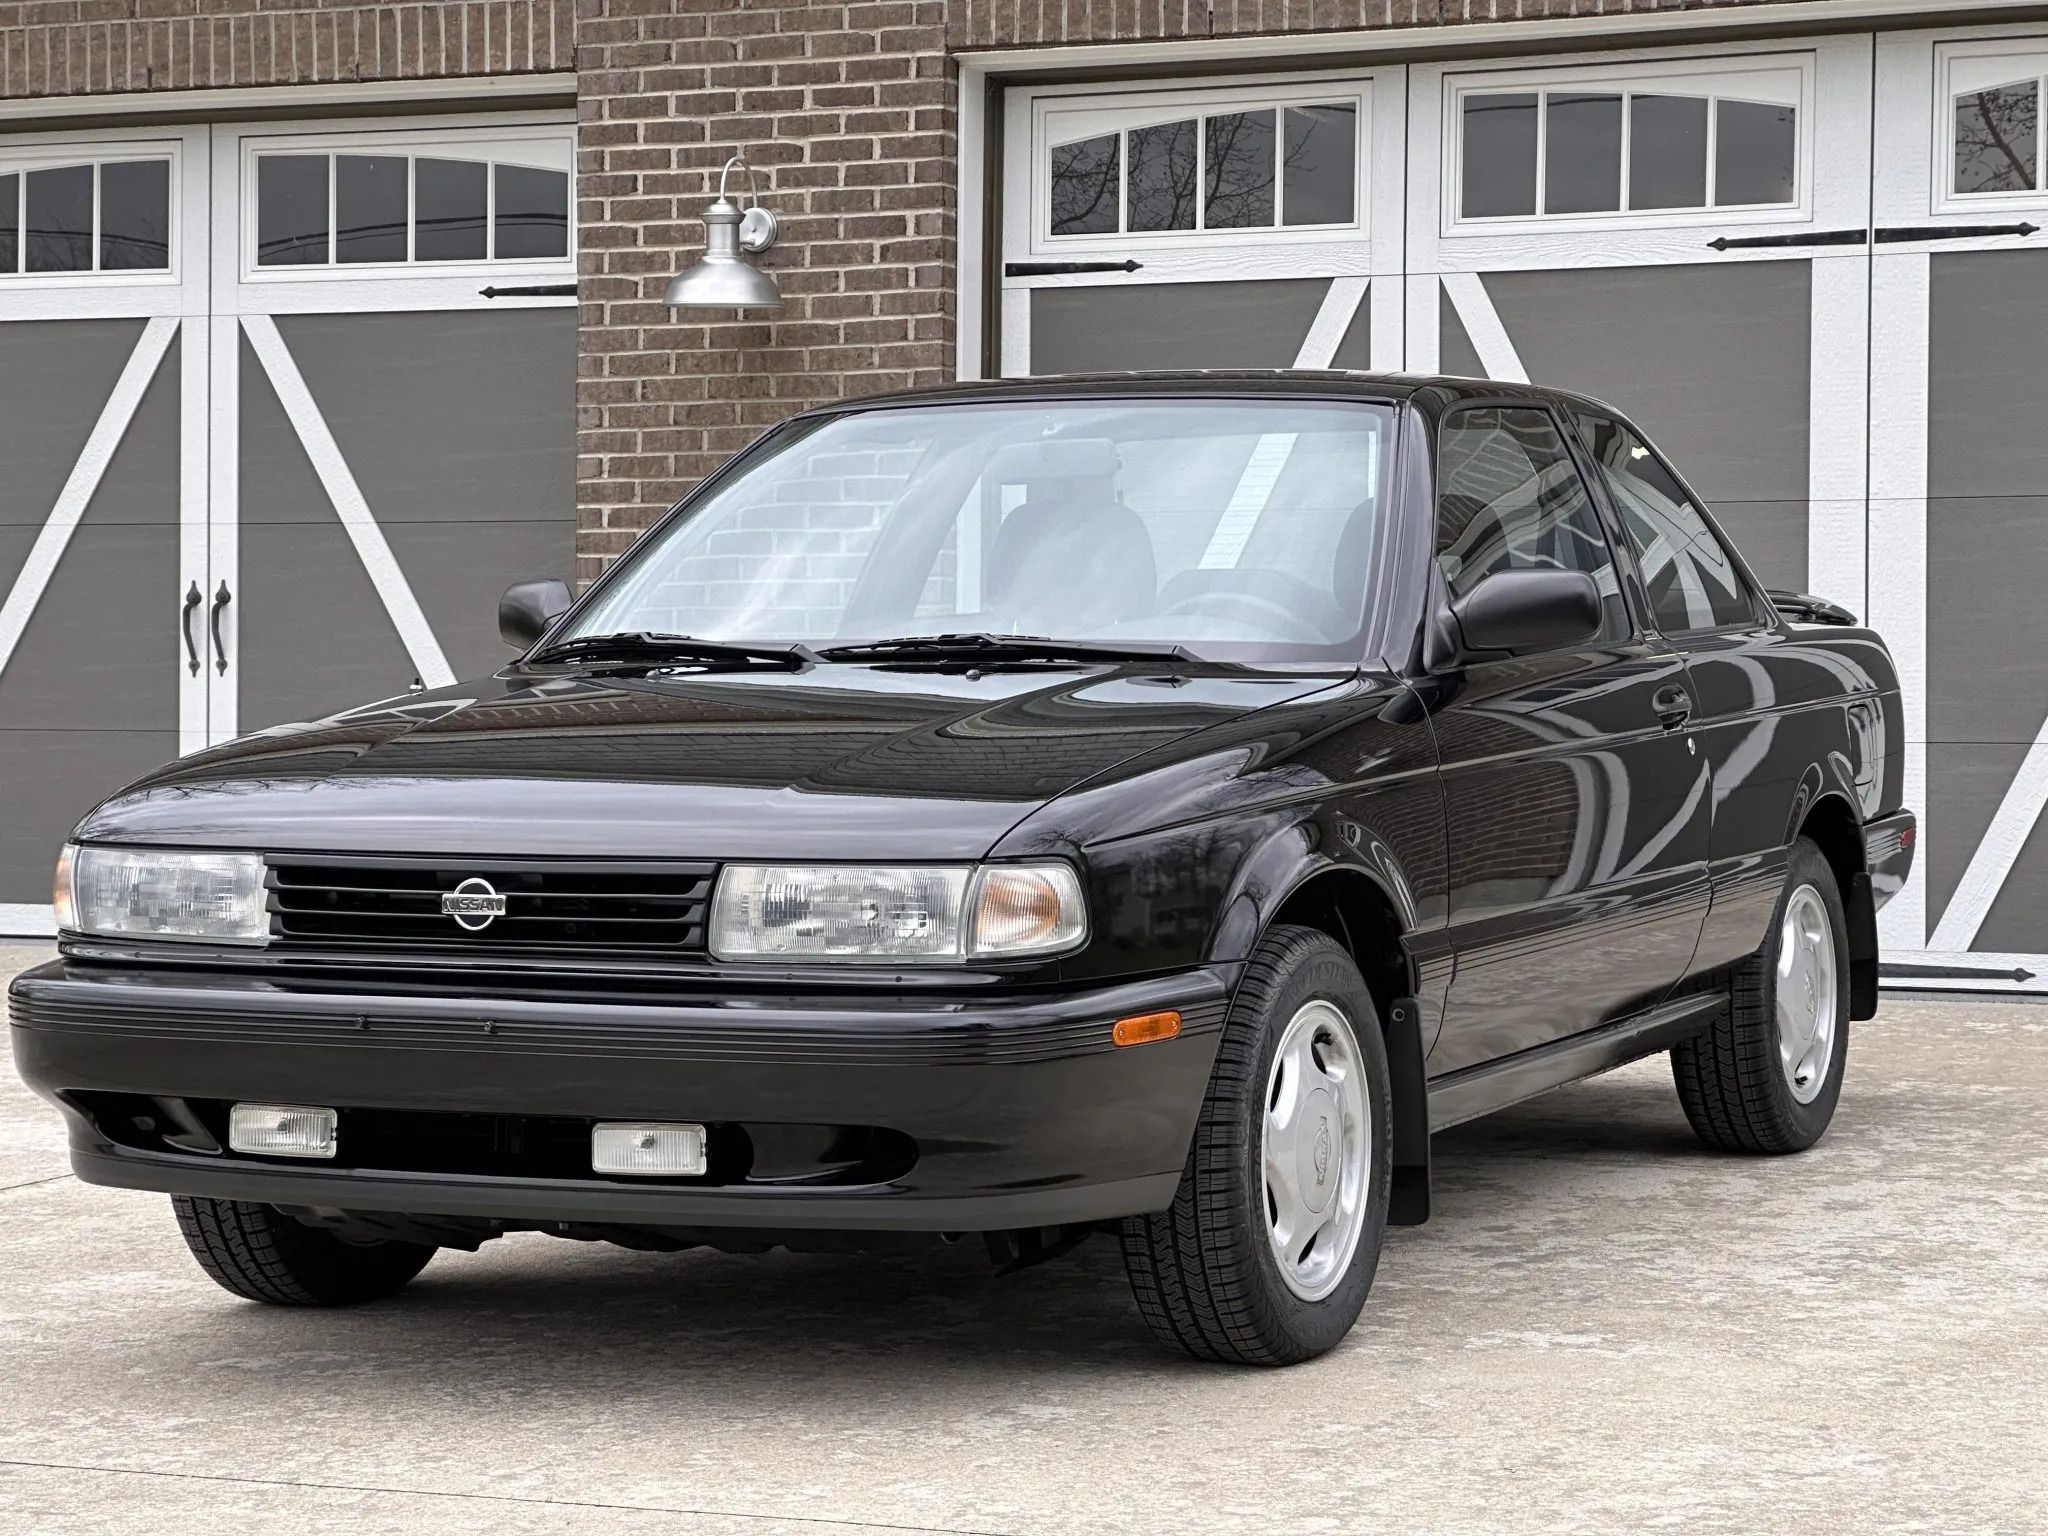 1992 Nissan Sentra SE-R black coupe